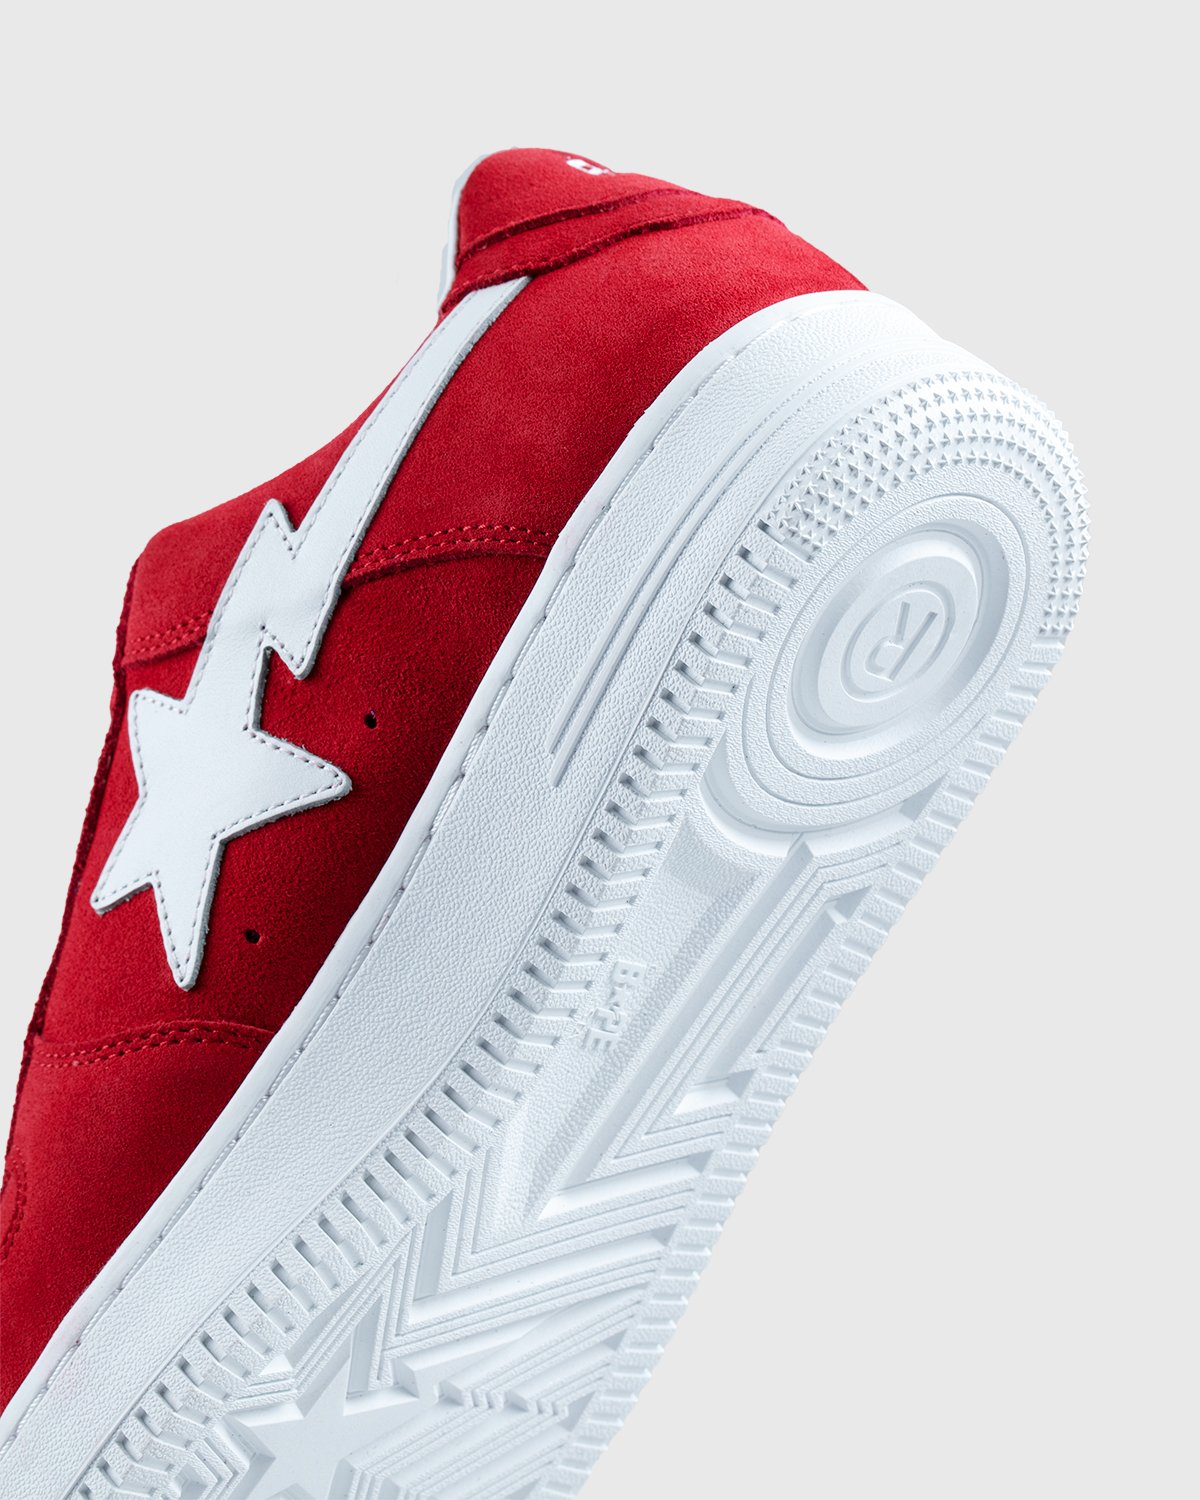 BAPE x Highsnobiety - BAPE STA Red - Footwear - Red - Image 5